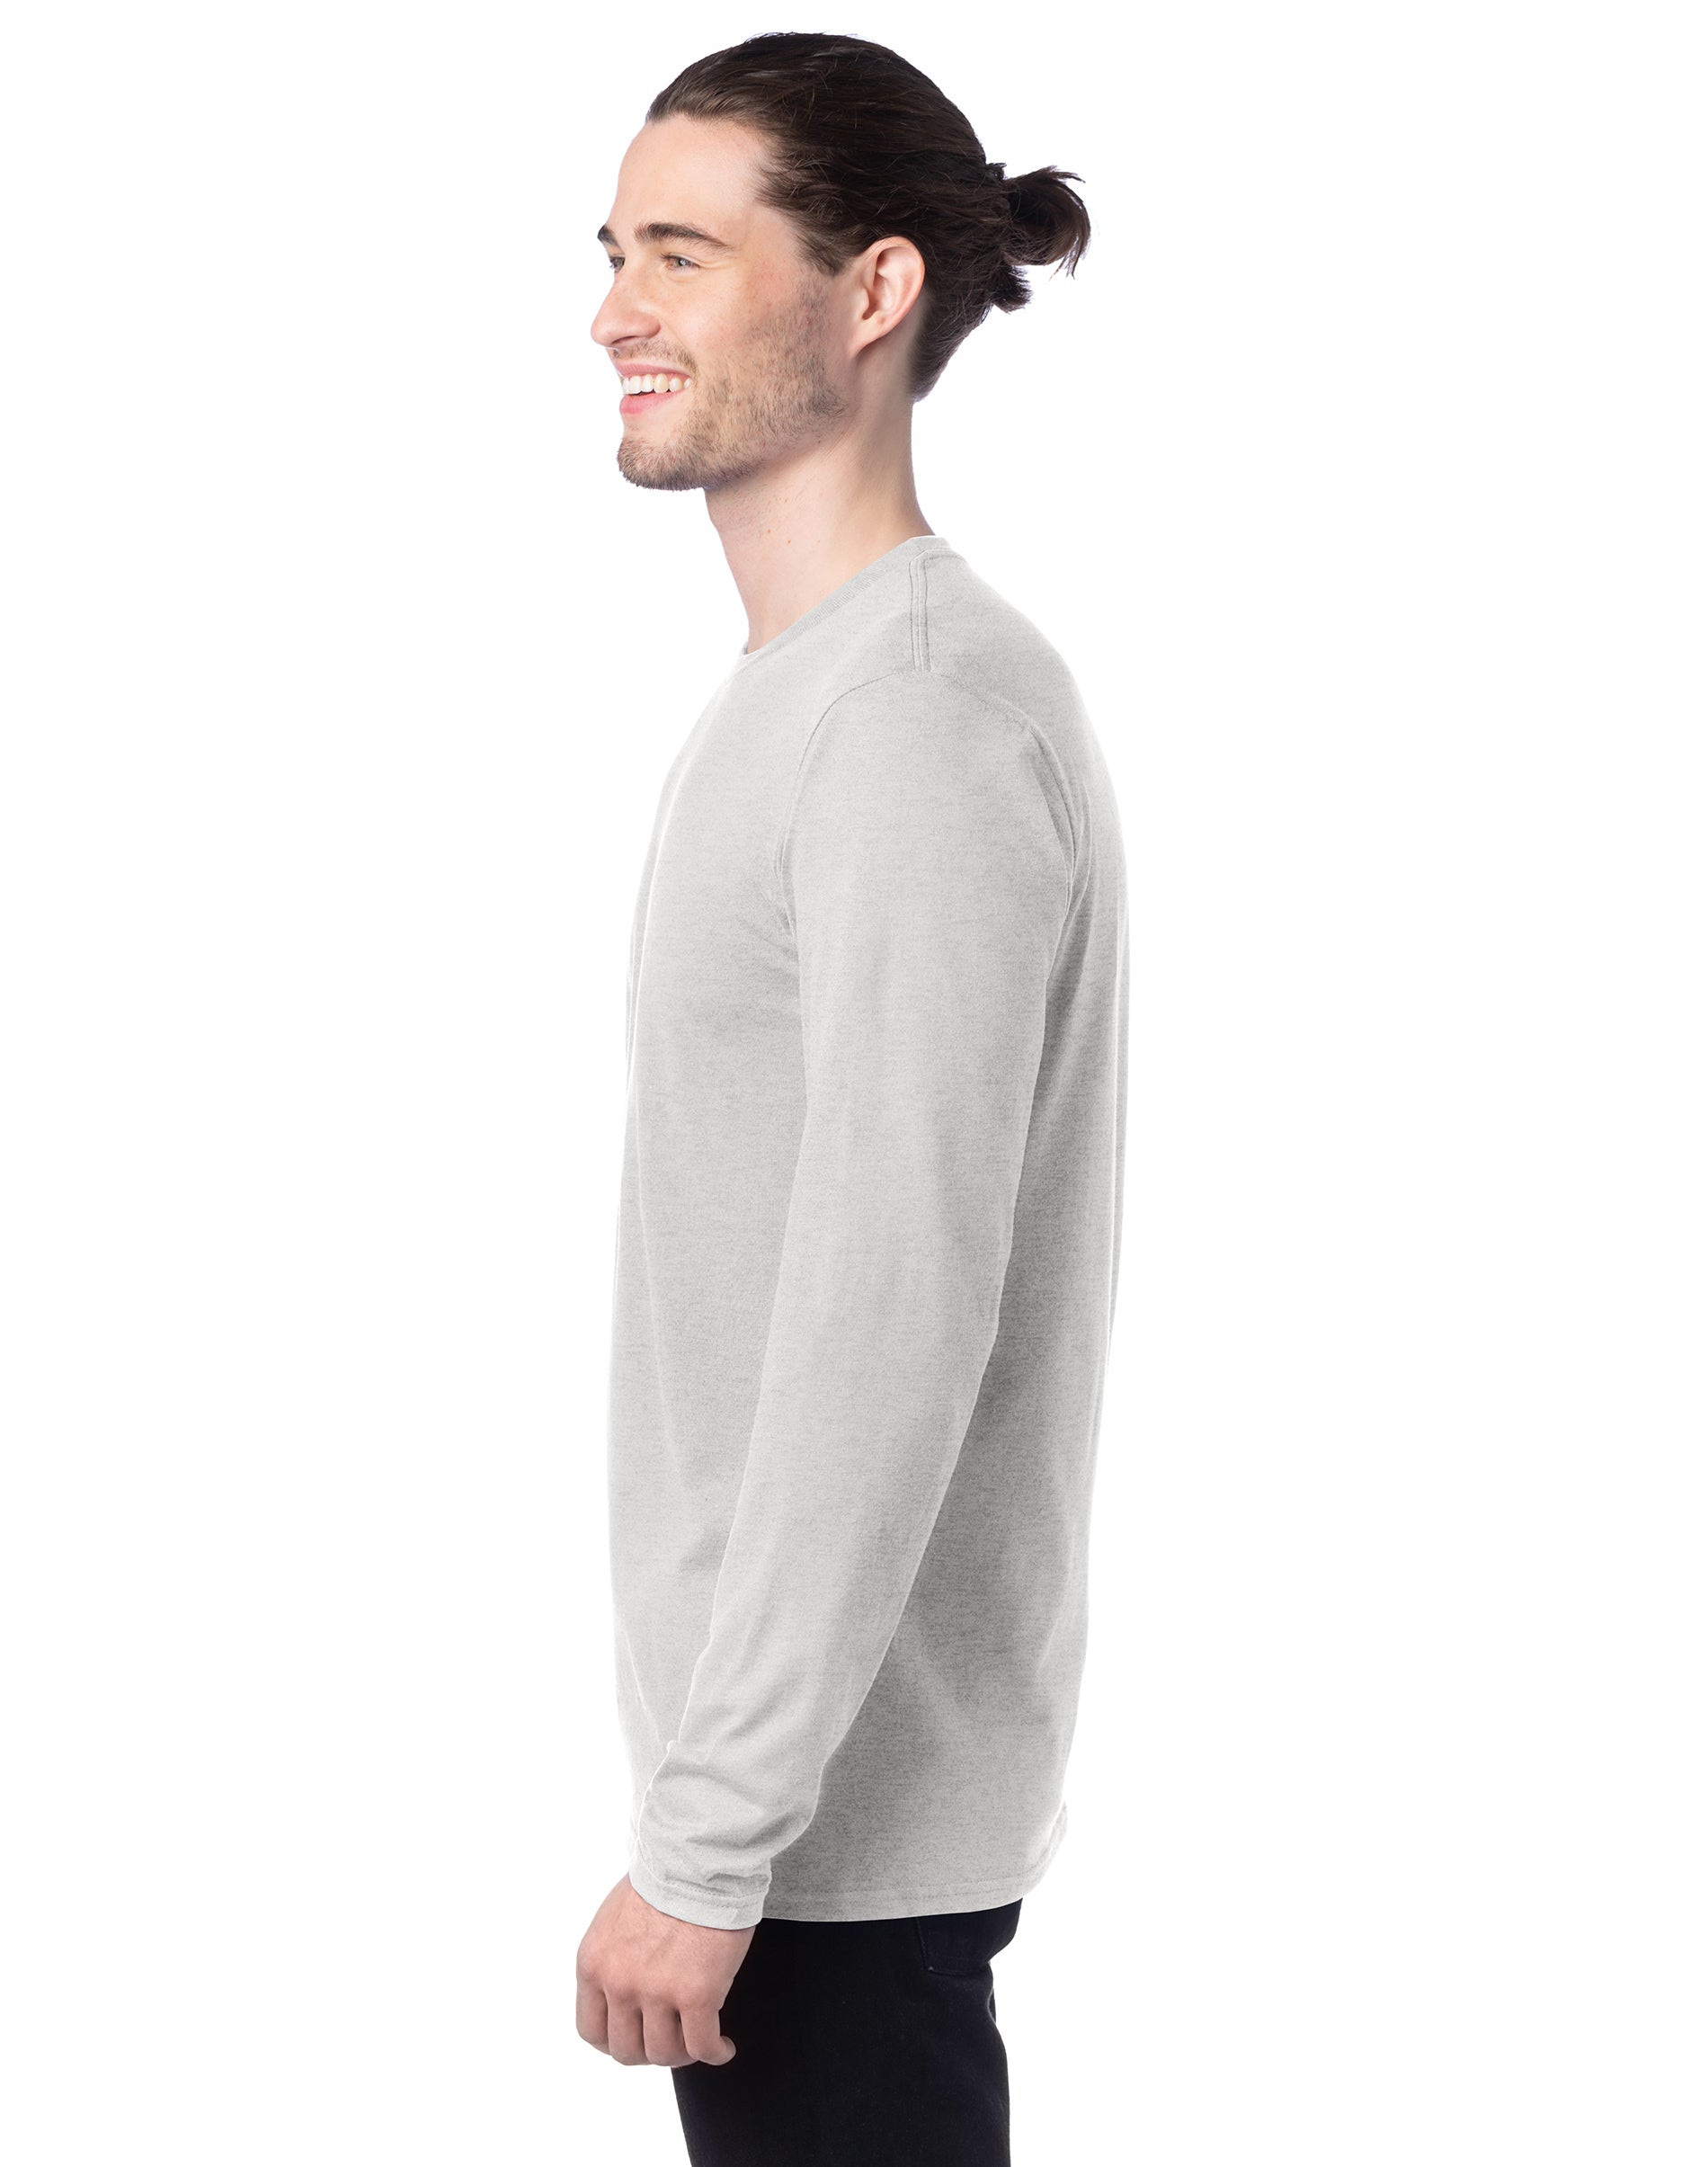 Hanes Men's Perfect-T Long Sleeve T-Shirt Ash S - image 2 of 8